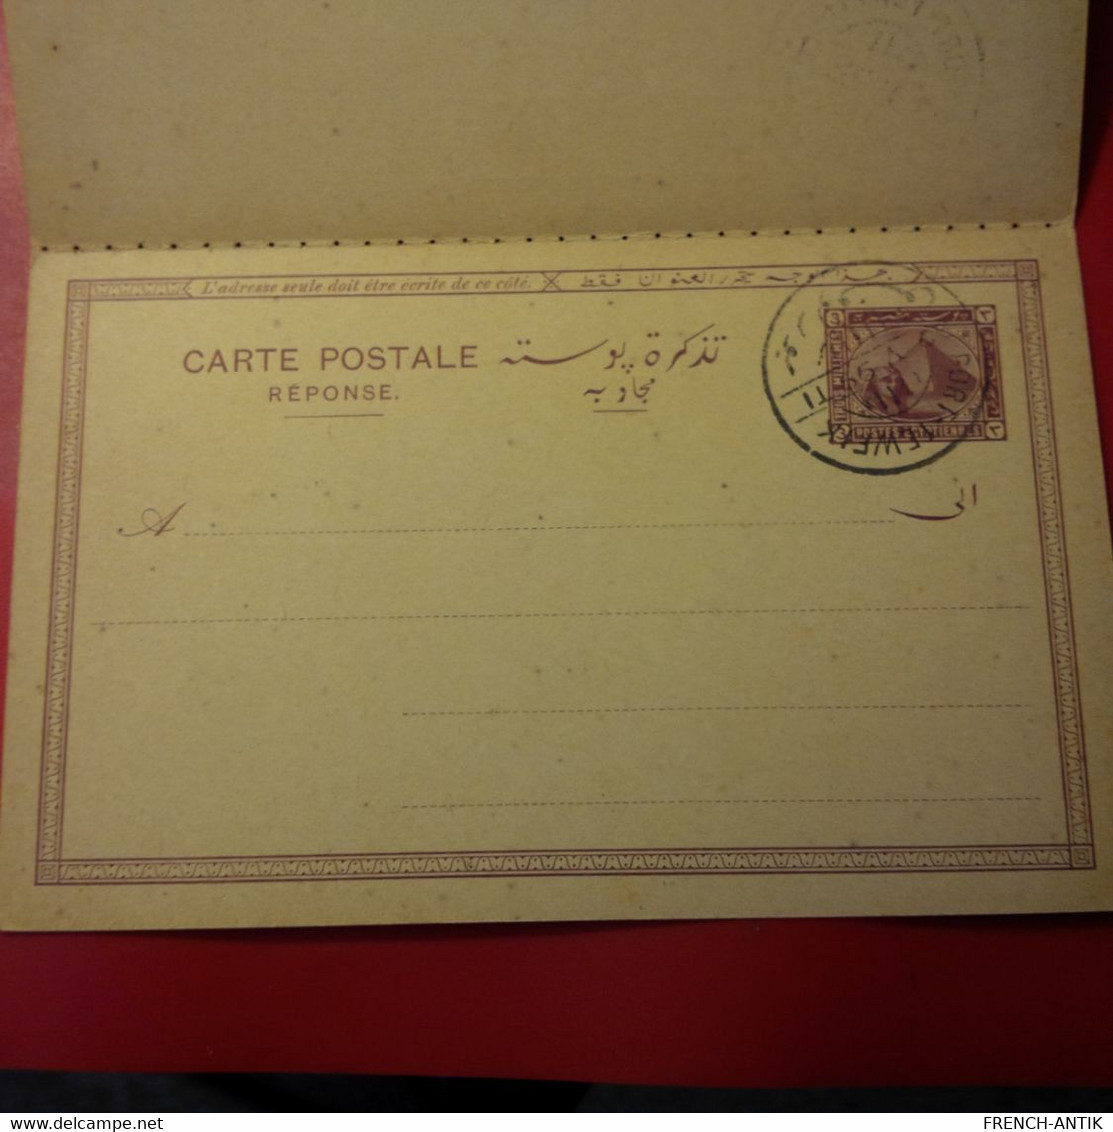 ENTIER EGYPTE DOUBLE - 1866-1914 Khedivate Of Egypt